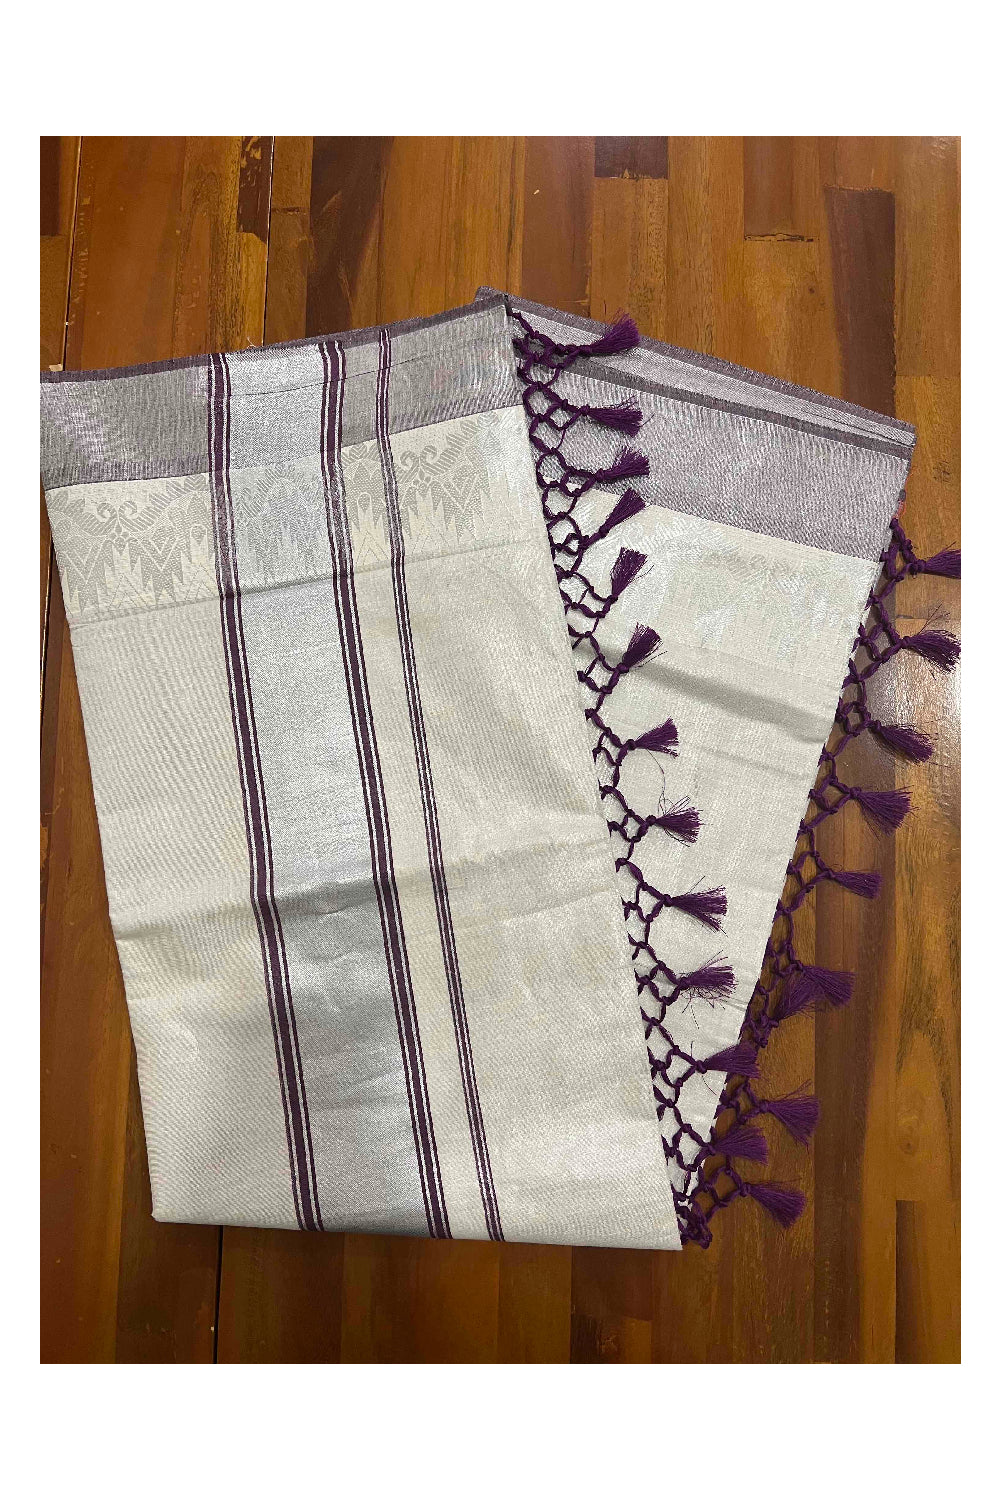 Kerala Silver Tissue Plain Saree with Purple and Silver Border